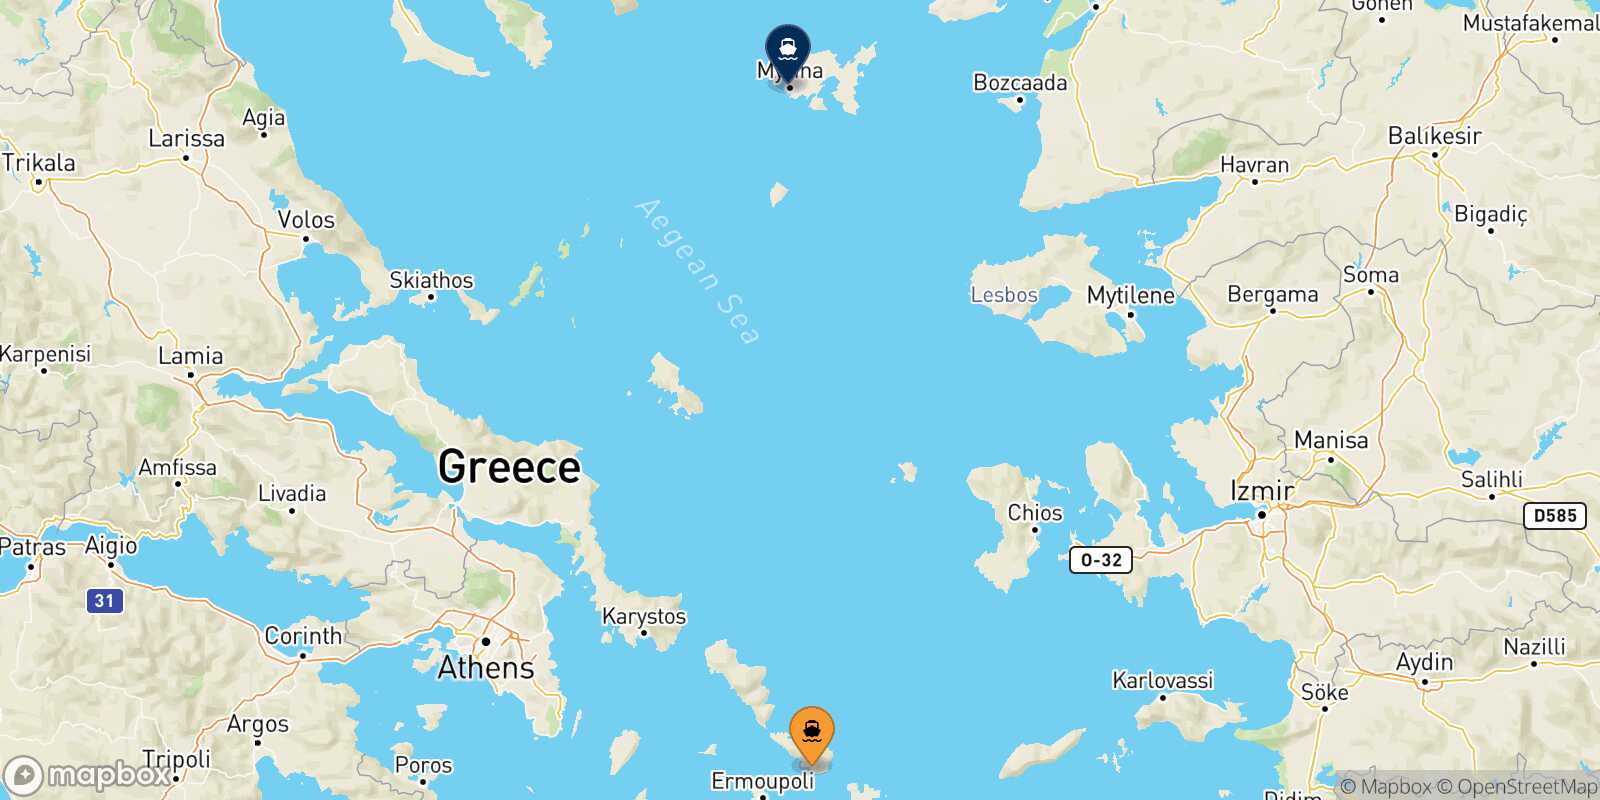 Tinos Myrina (Limnos) route map